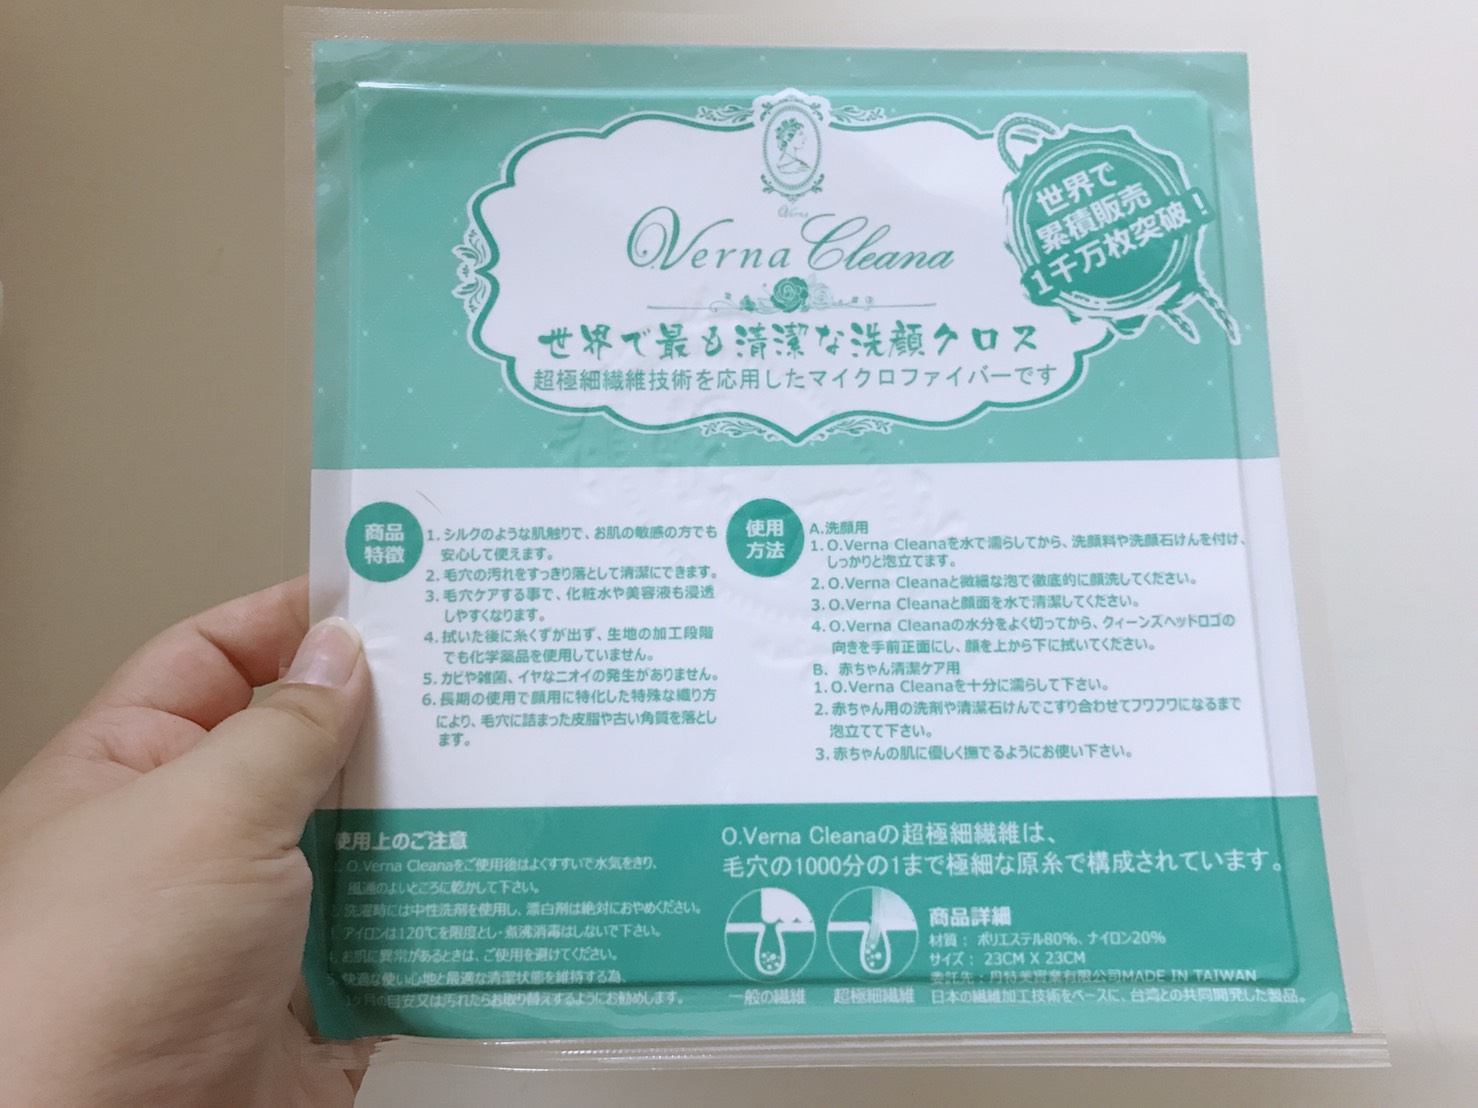 skincare/cleanser/臉部清潔產品-O.Verna cleana 超細纖維深層潔顏布-卸除彩妝，一塊布就可以！日本特殊專利織法，體驗輕柔中的極致純淨～ 保養品分享 健康養身 彩妝品分享 民生資訊分享  